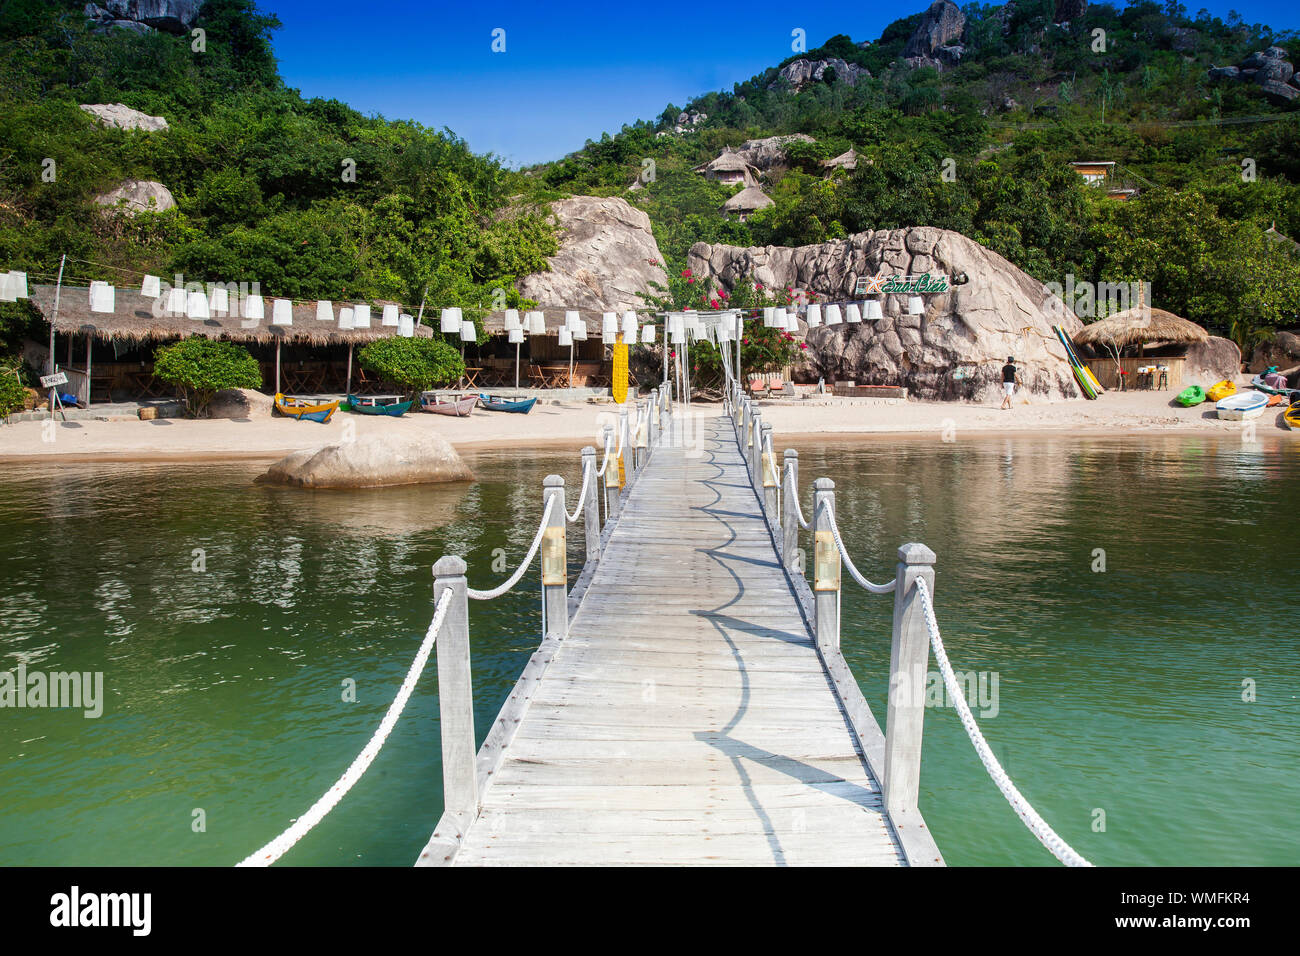 Beach and resort of Sao Bien, Bay of Cam Ranh, south china sea, Ninh Thuan, Vietnam, Asia Stock Photo